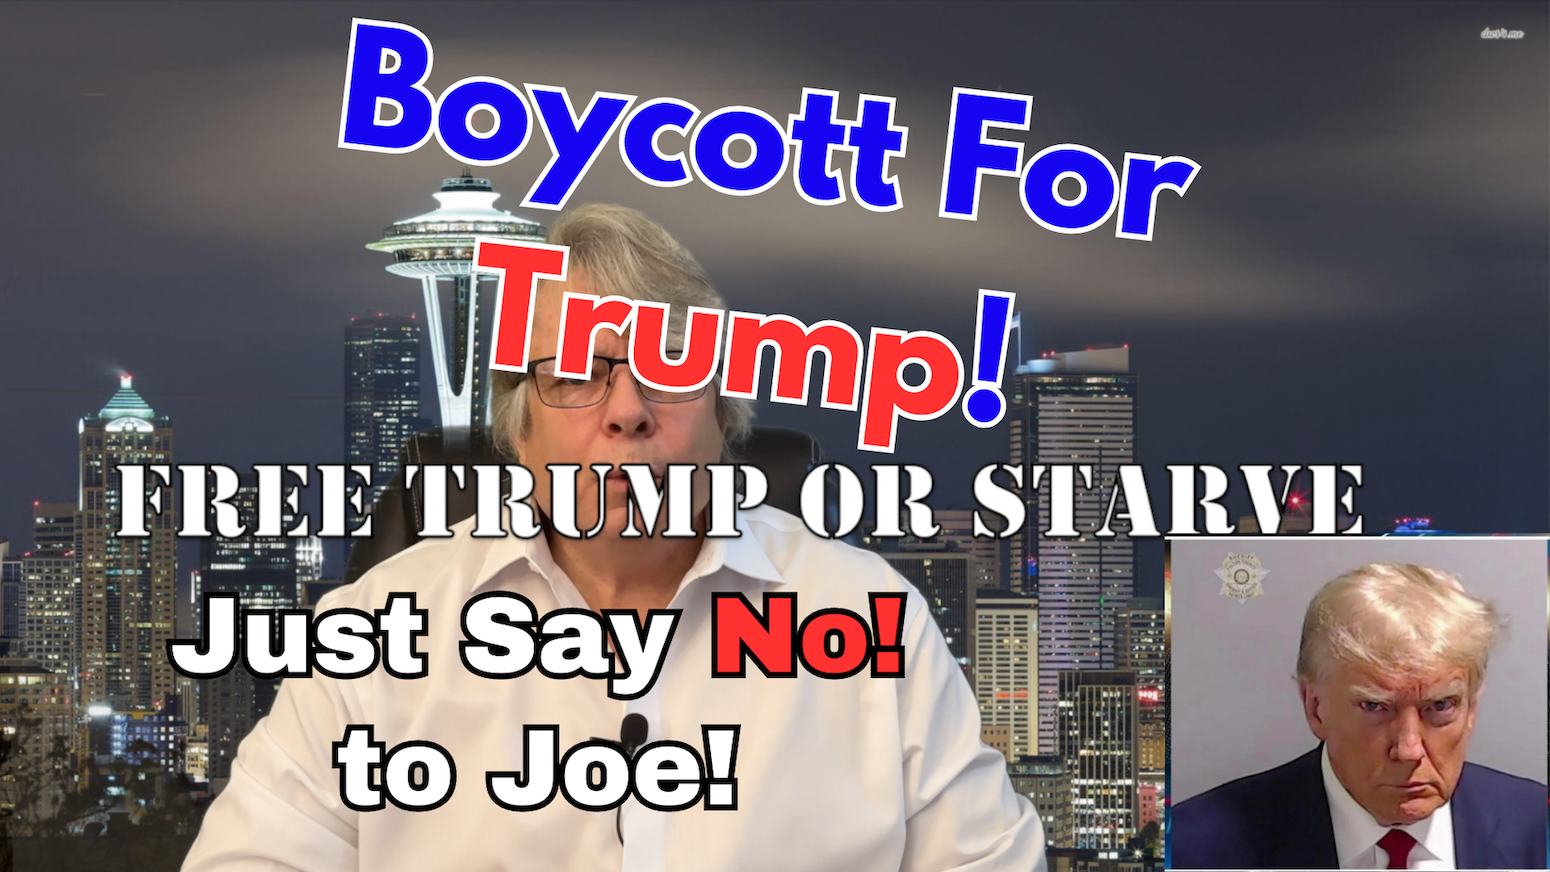 Boycott for Trump Congressional Candidate Matthew Heines leads the Boycott for Trump